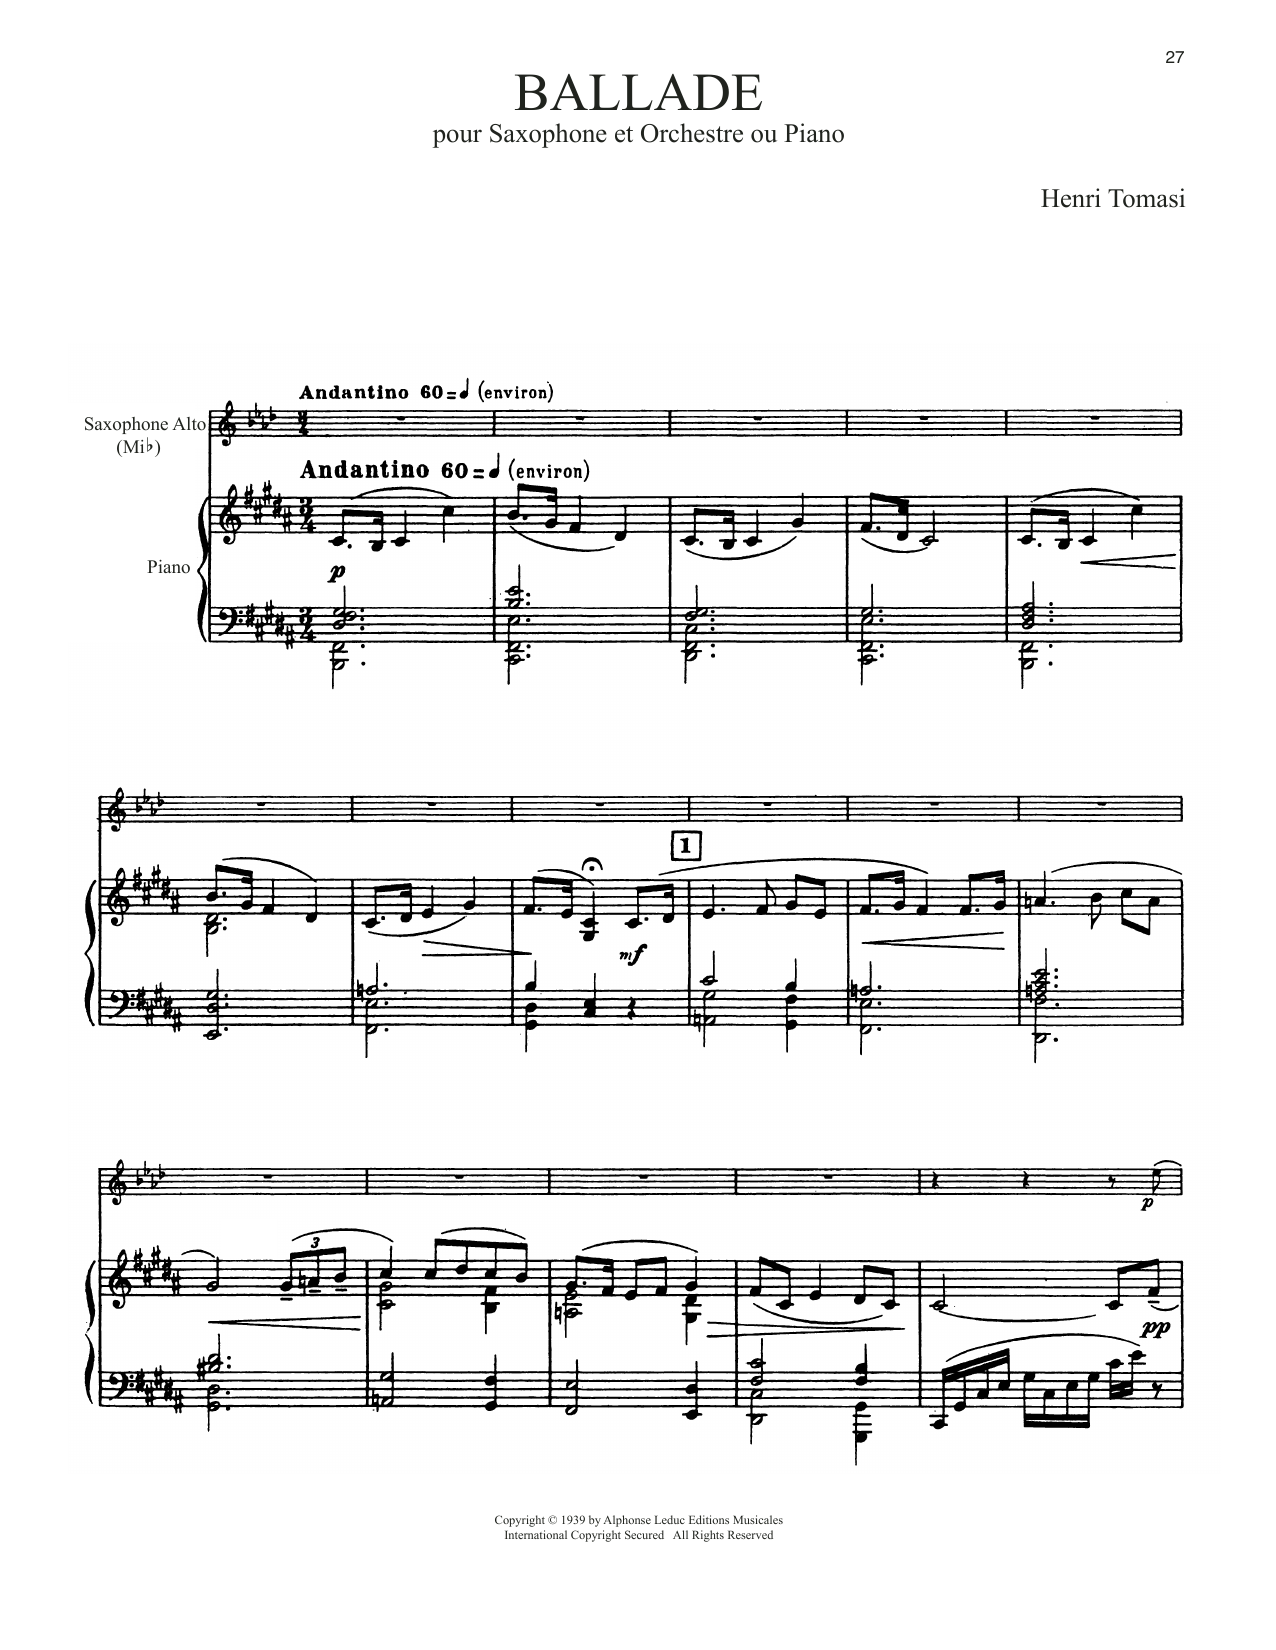 Henri Tomasi Ballade Sheet Music Notes & Chords for Alto Sax and Piano - Download or Print PDF